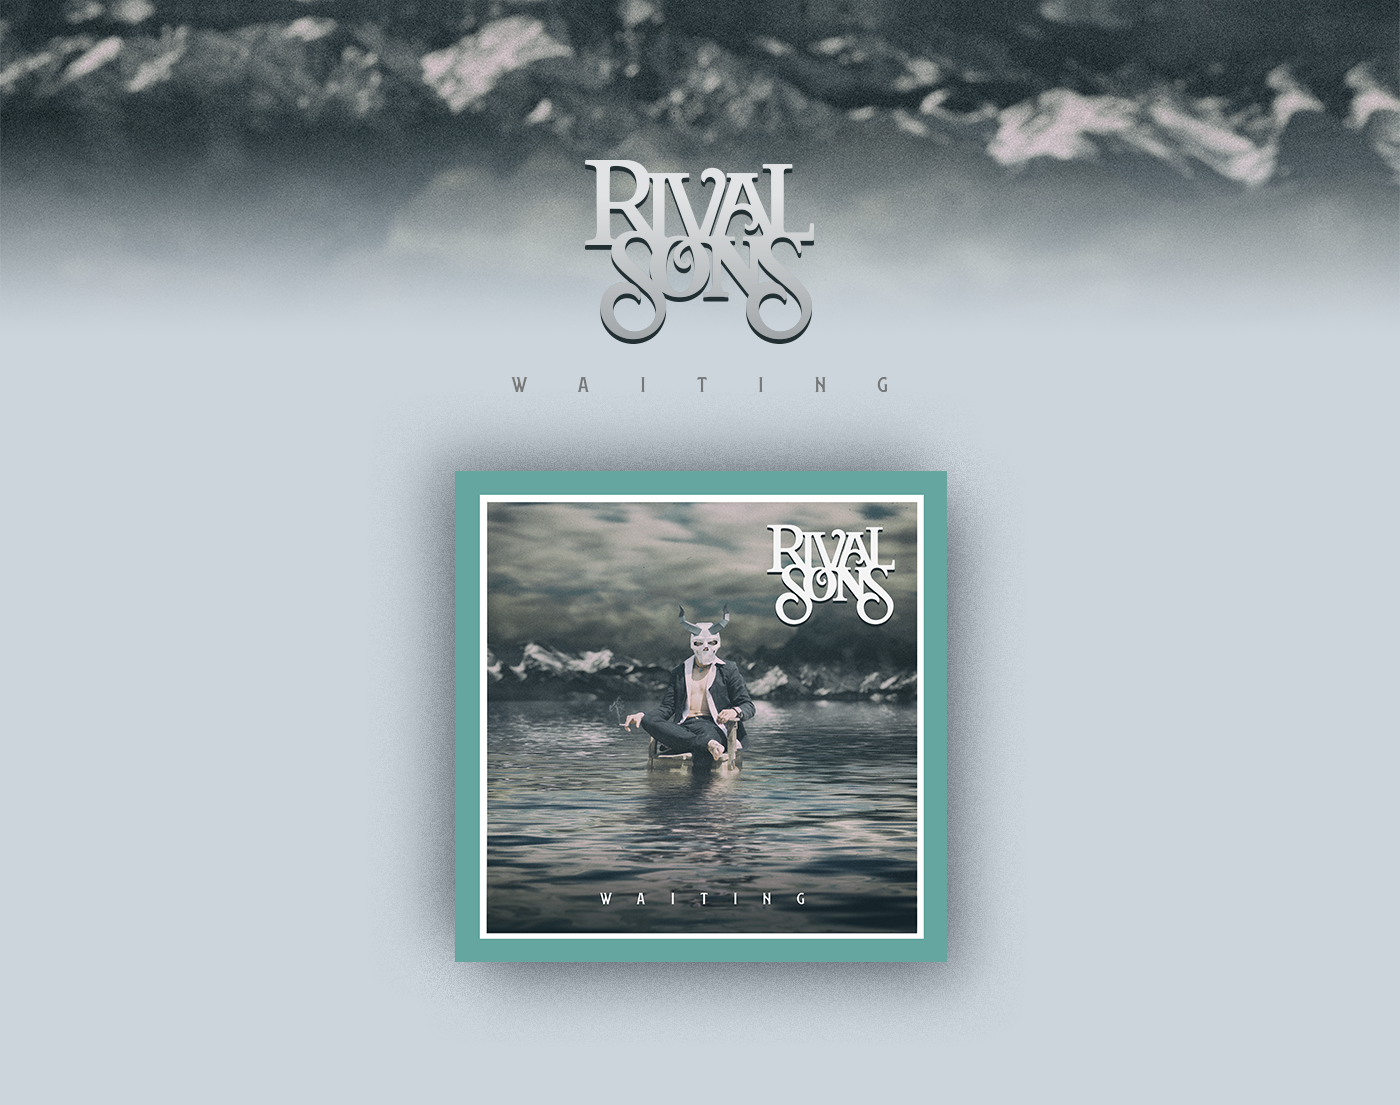 CD cover Album rock vinil Rival Sons cd cover 3D wintercroft photoshop